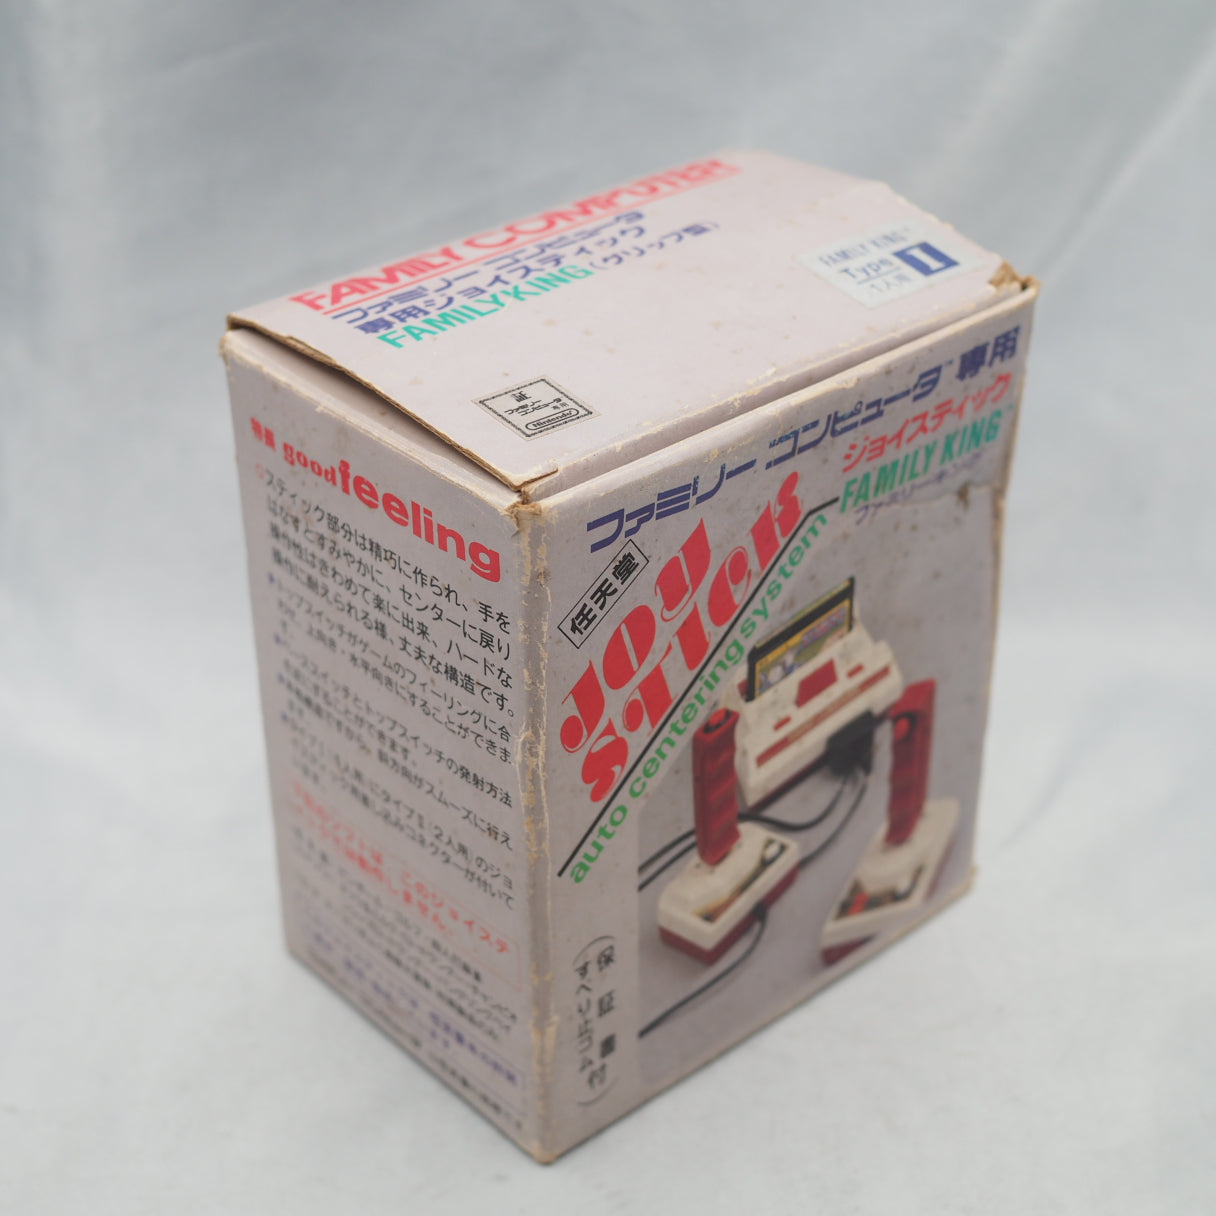 Famicom JOY STICK FAMILY KING Type 1 Controller